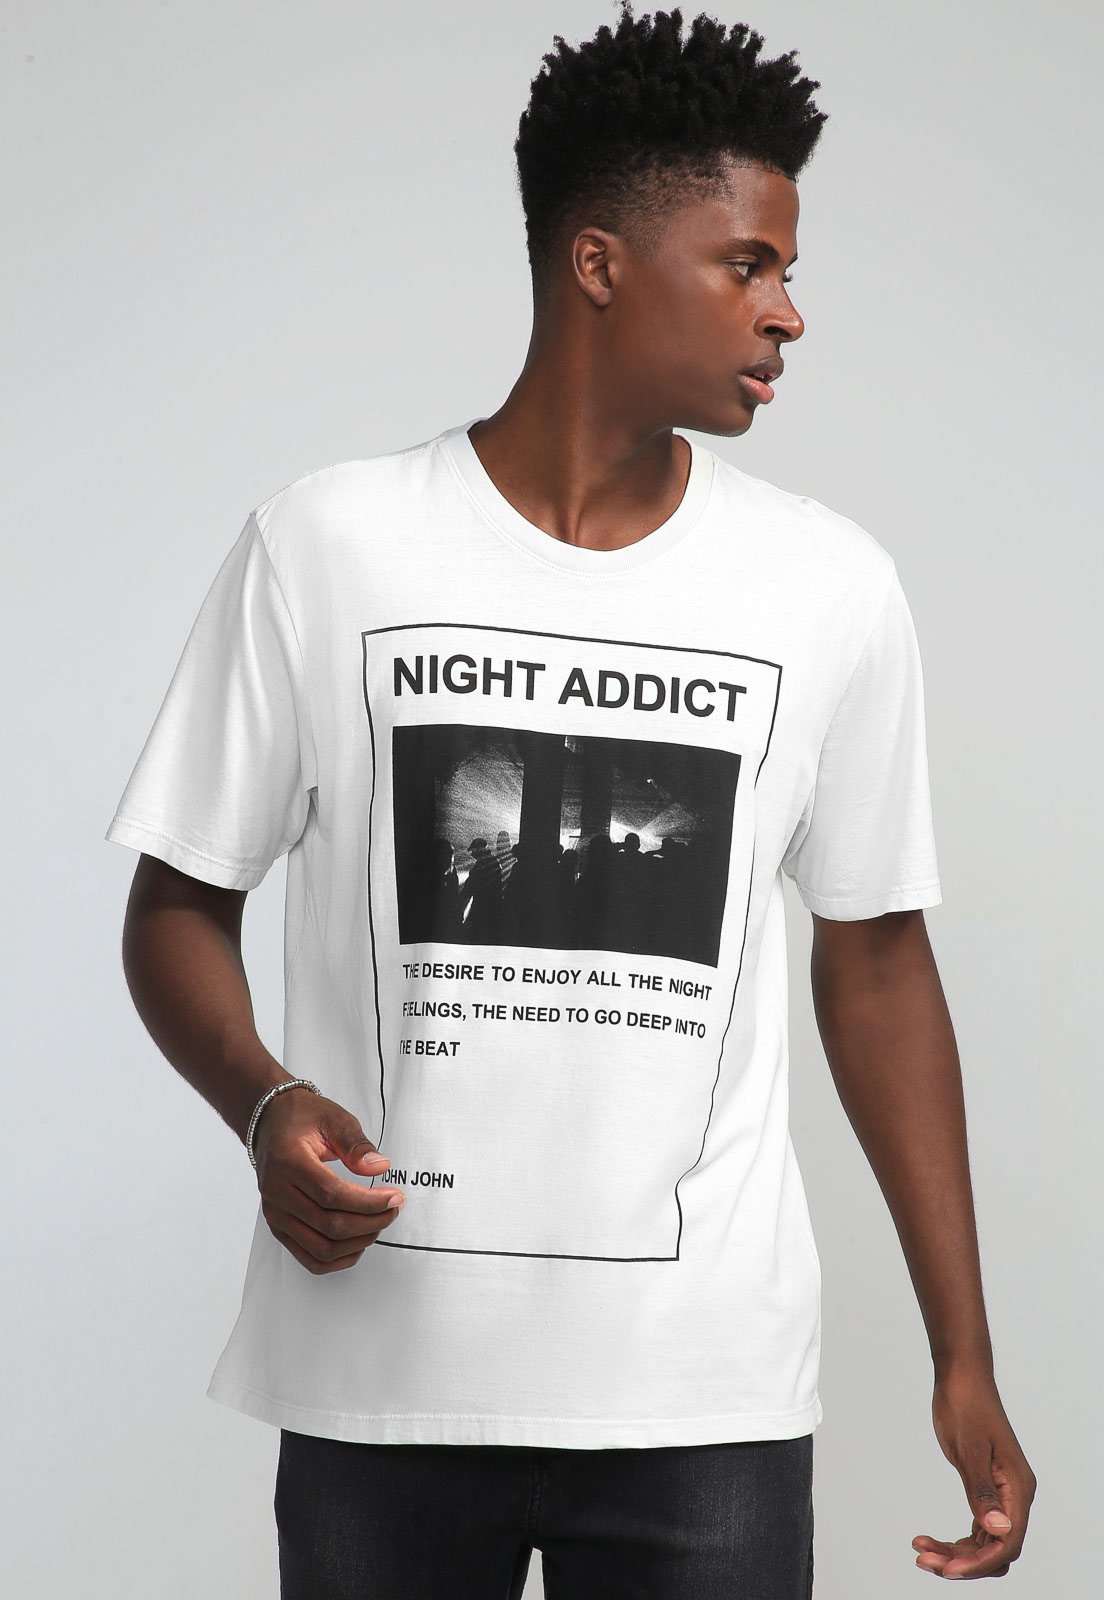 Night Addict - Night Addict added a new photo.